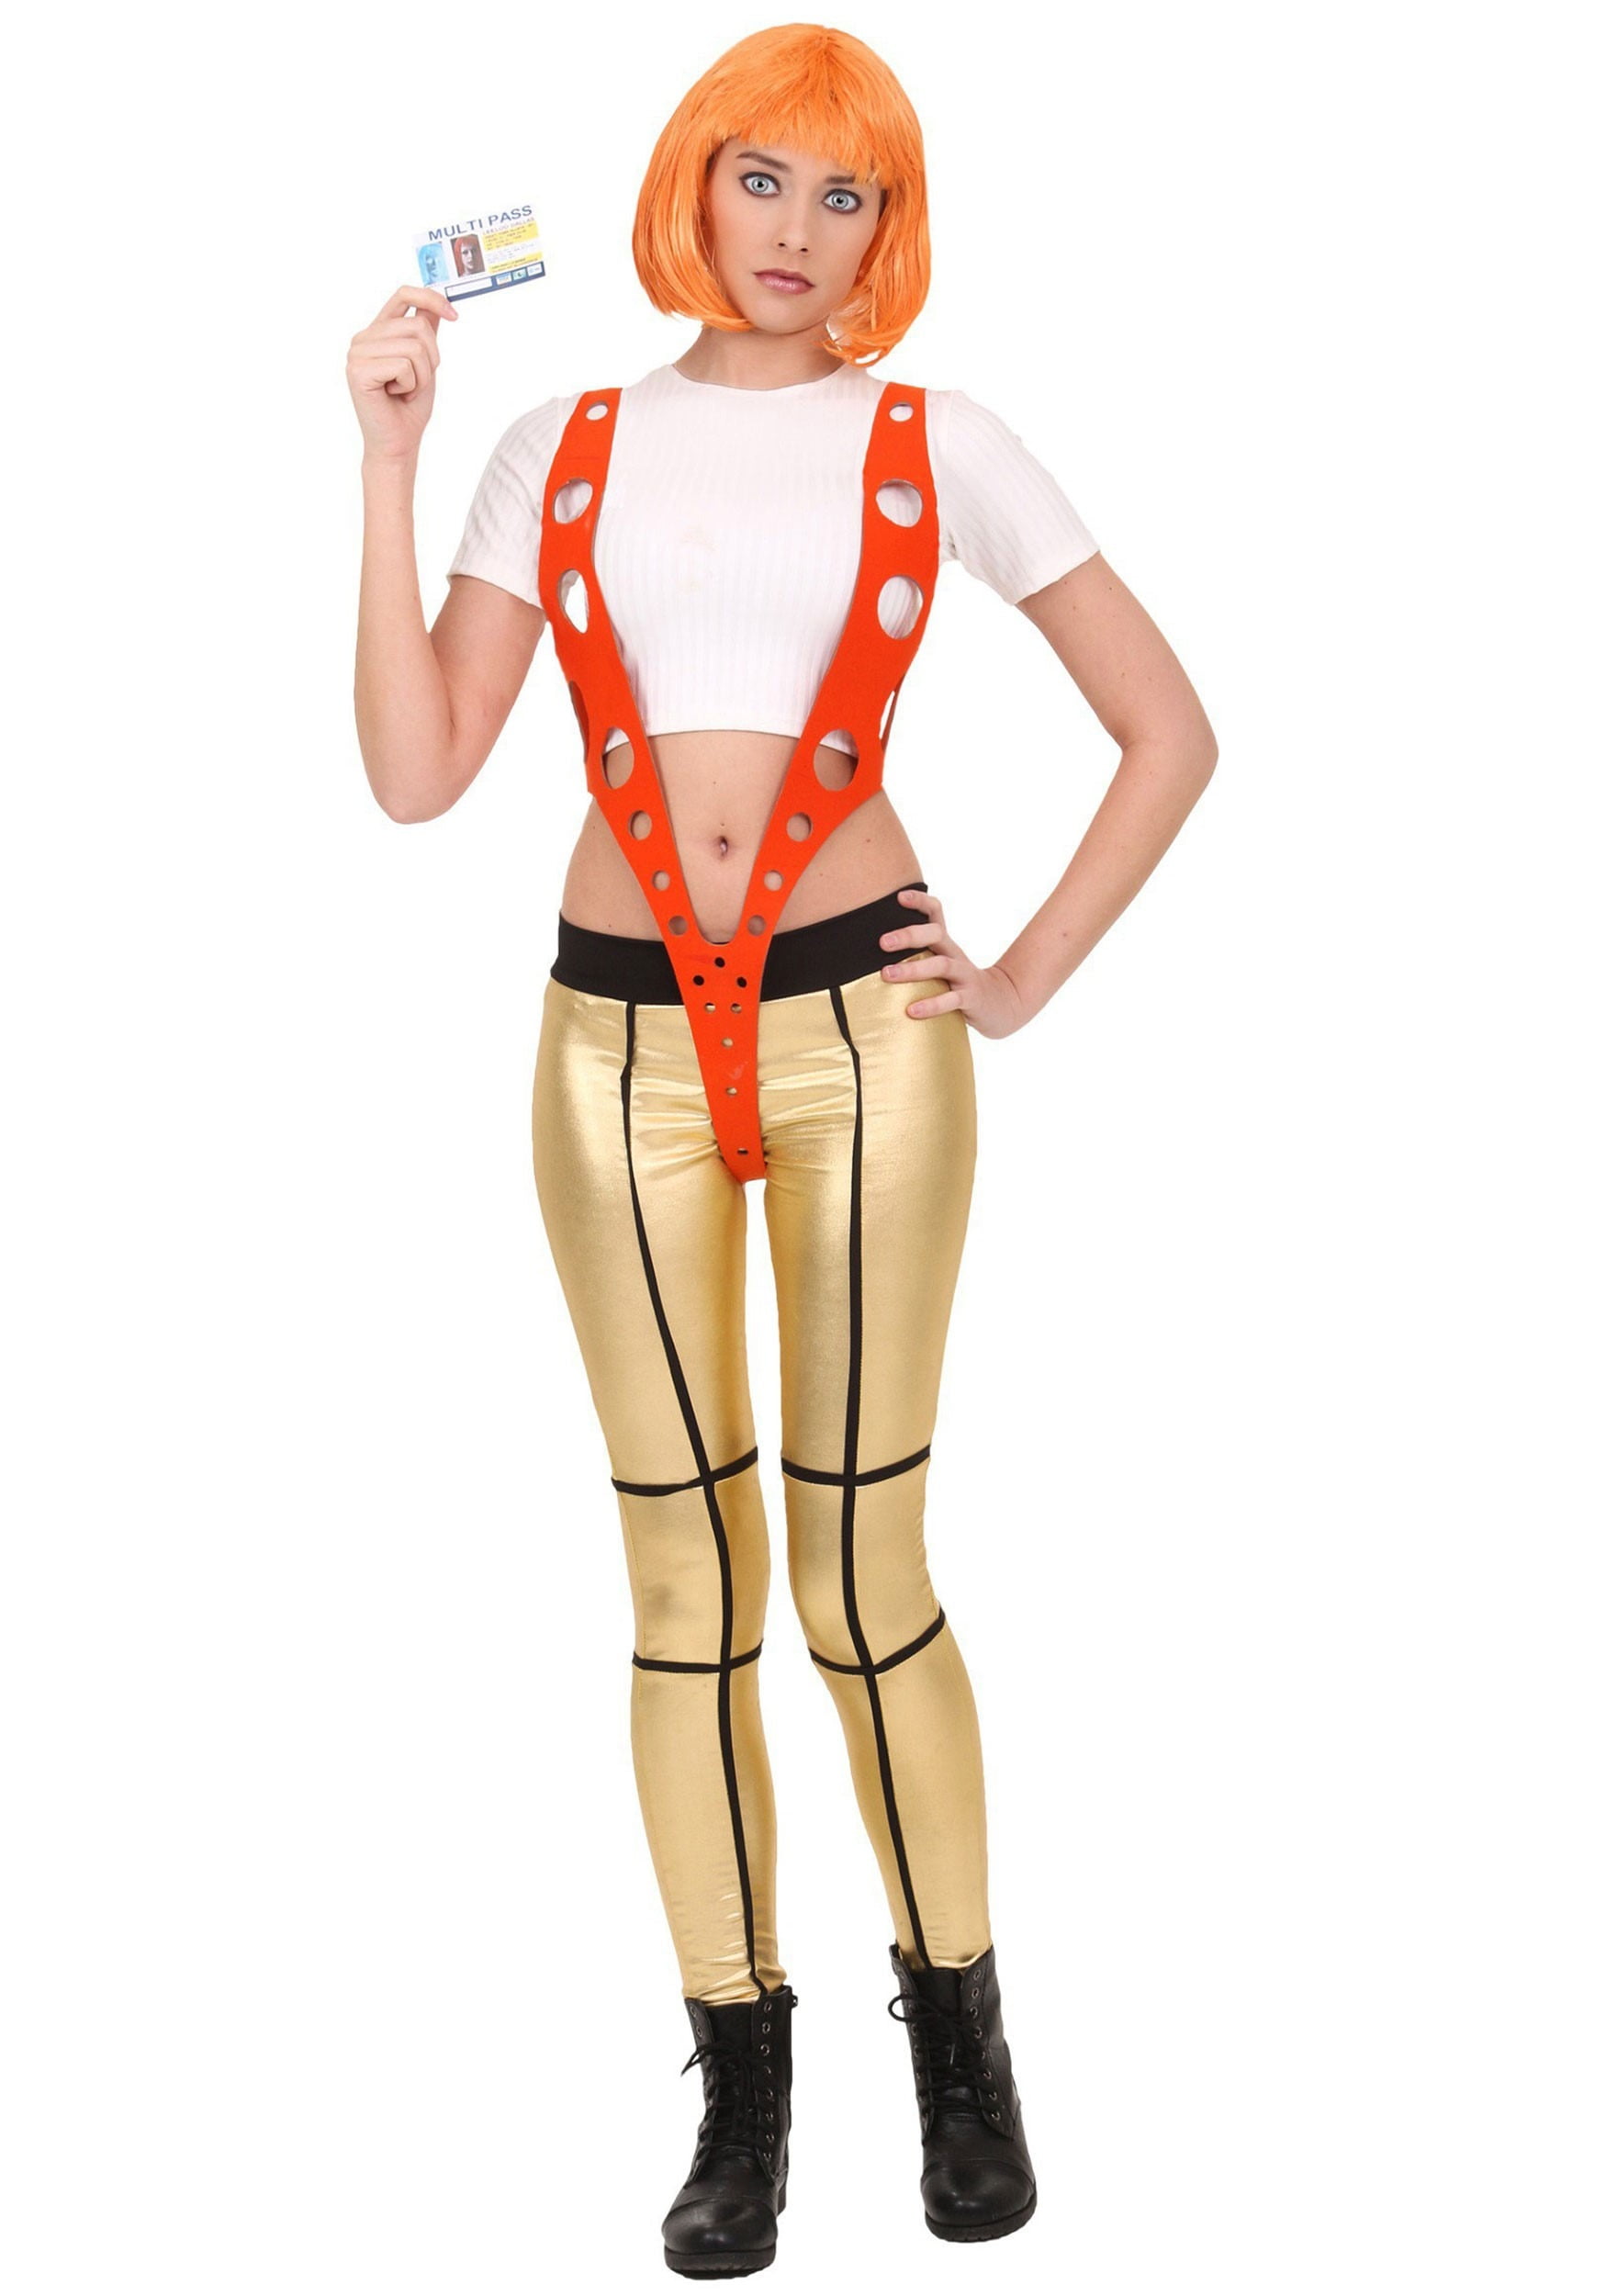 5th Element Leeloo Orange Harness Costume - Walmart.com.